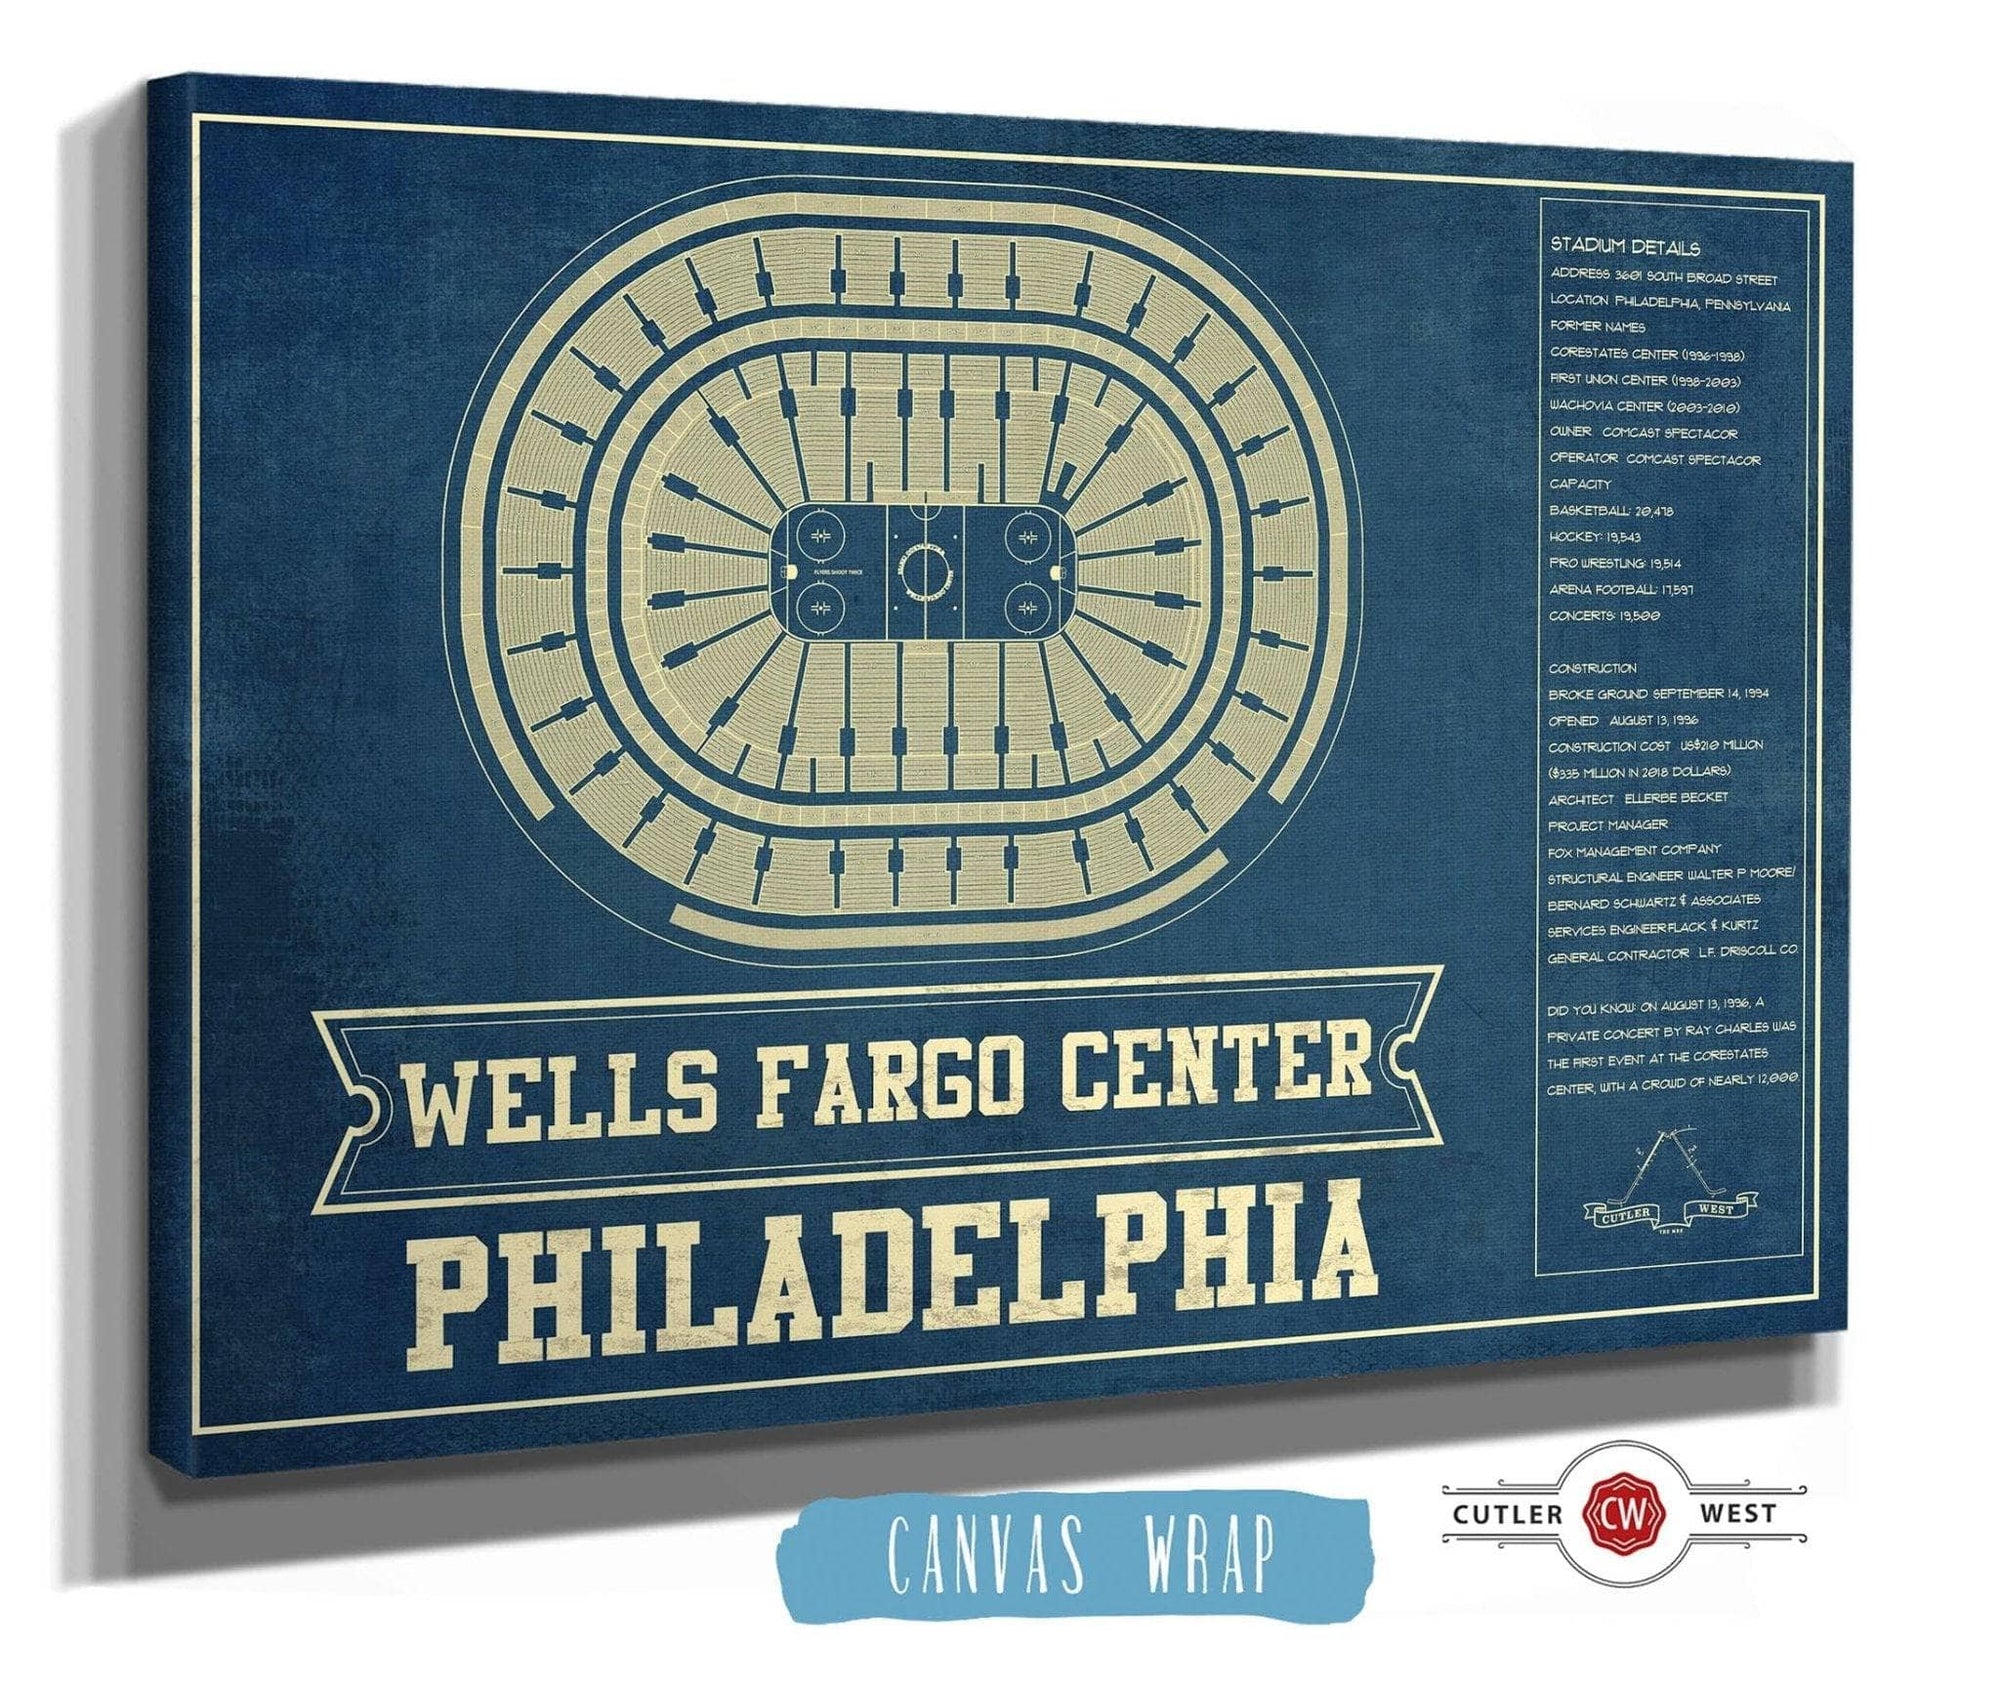 Cutler West 14" x 11" / Stretched Canvas Wrap Philadelphia Flyers Wells Fargo Center Philadelphia Seating Chart - Vintage Hockey Team Color Print 673824383_80725